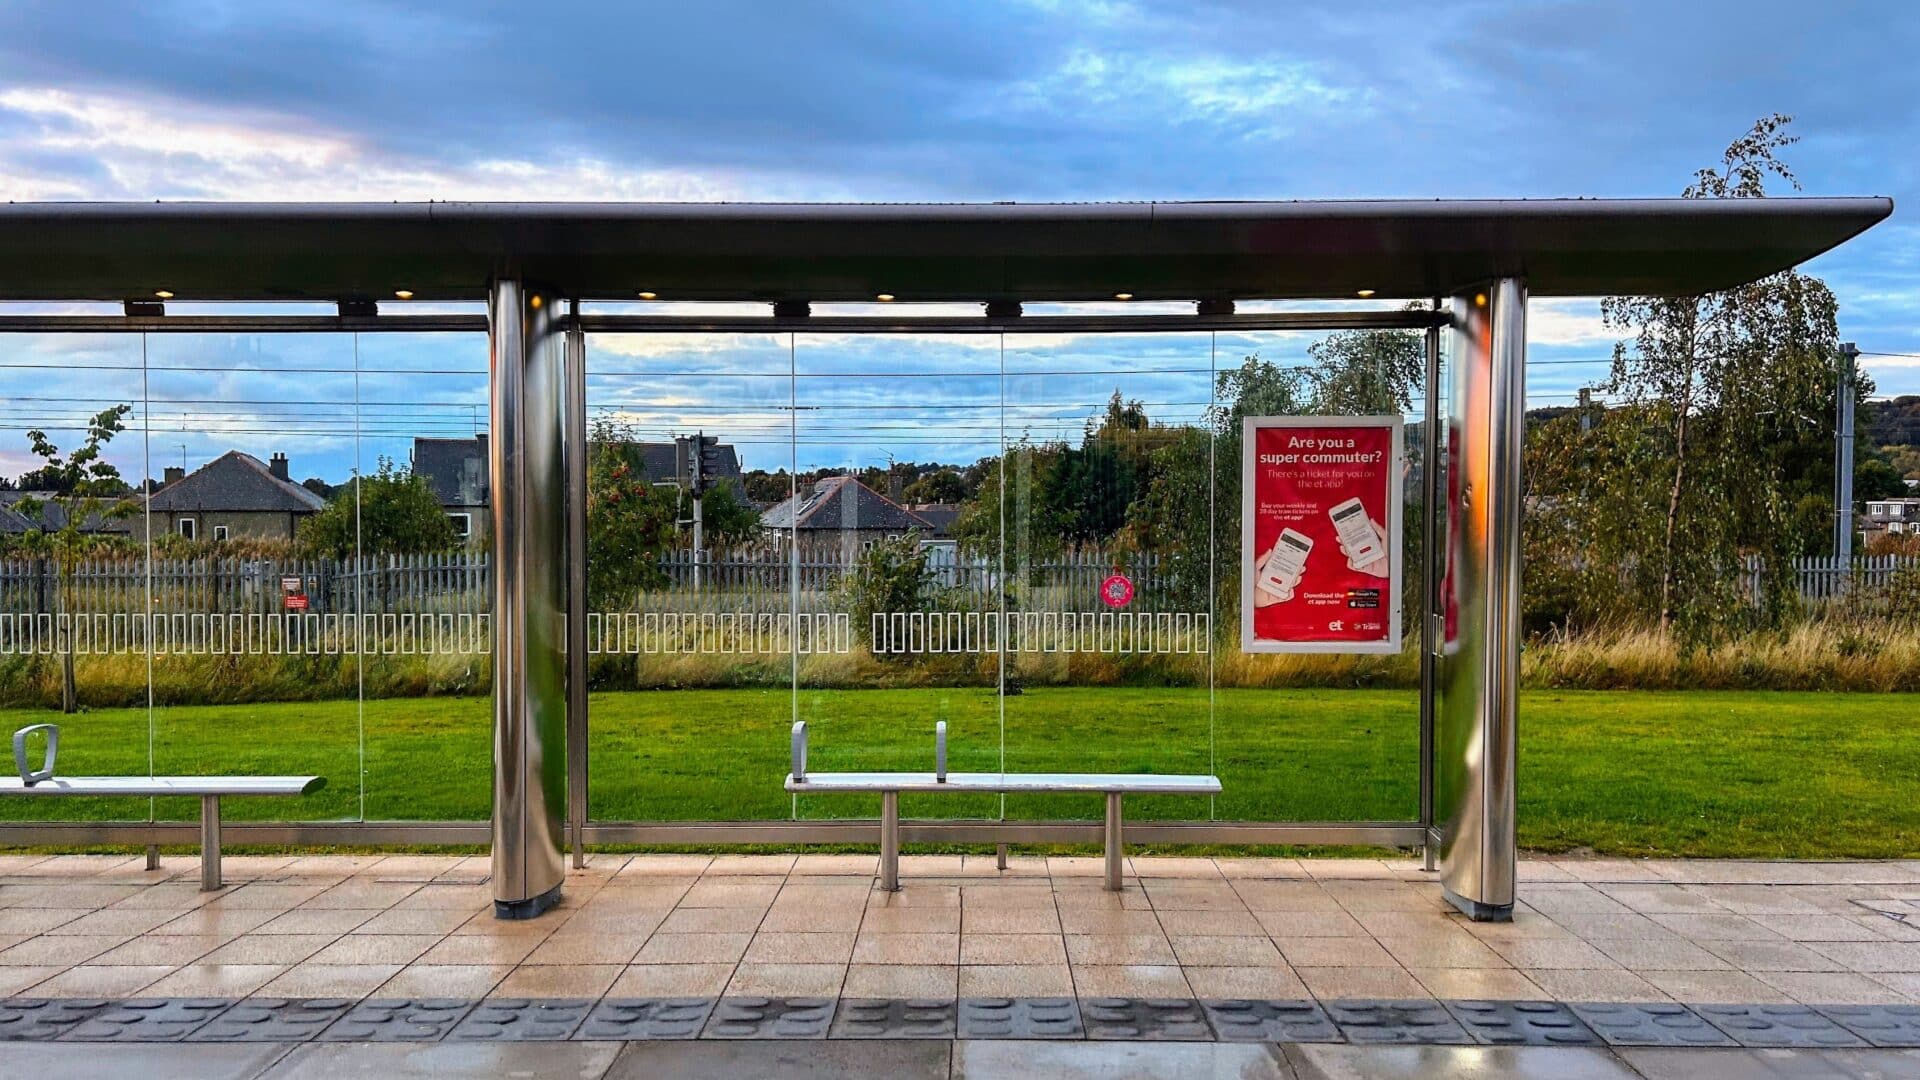 Edinburgh Park Station tram stop at Edinburgh Park business park displaying an ‘et app’ advert.